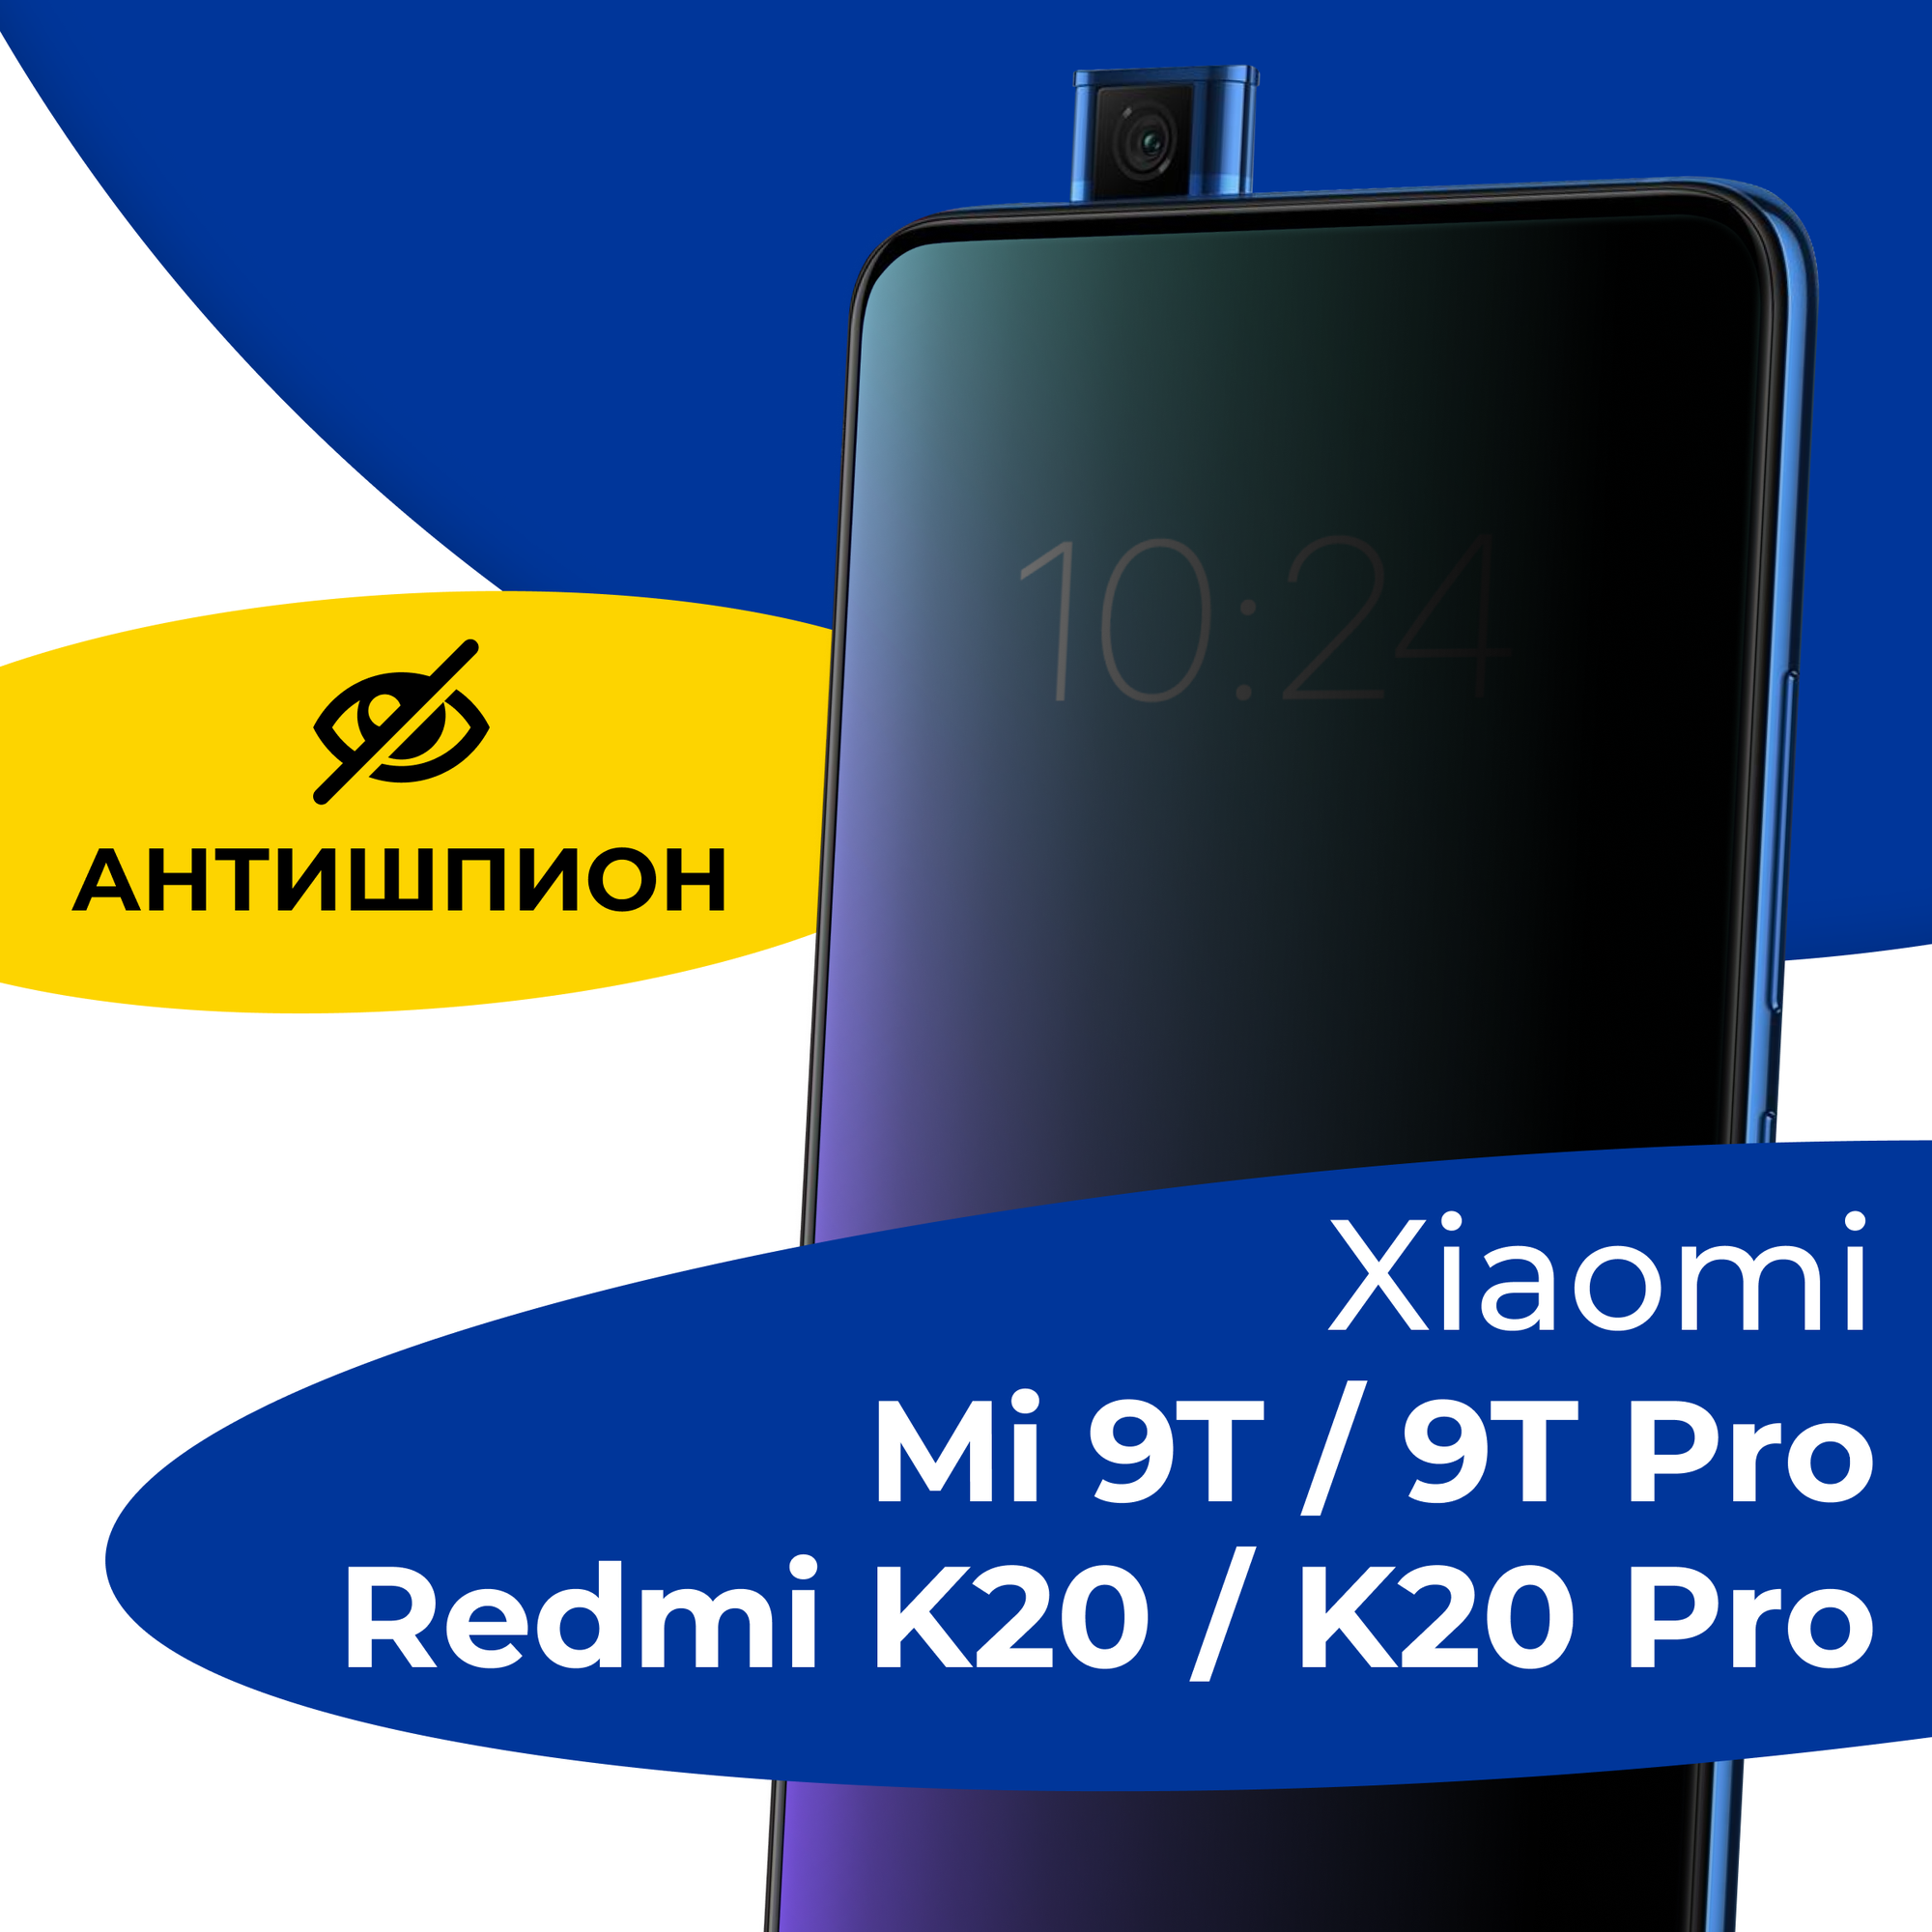 Защитное стекло Антишпион на телефон Xiaomi Mi 9T, Mi 9T Pro, Redmi K20, Redmi K20 Pro / Стекло для Сяоми Ми 9Т, Ми 9Т Про, Редми К20, Редми К20 Про